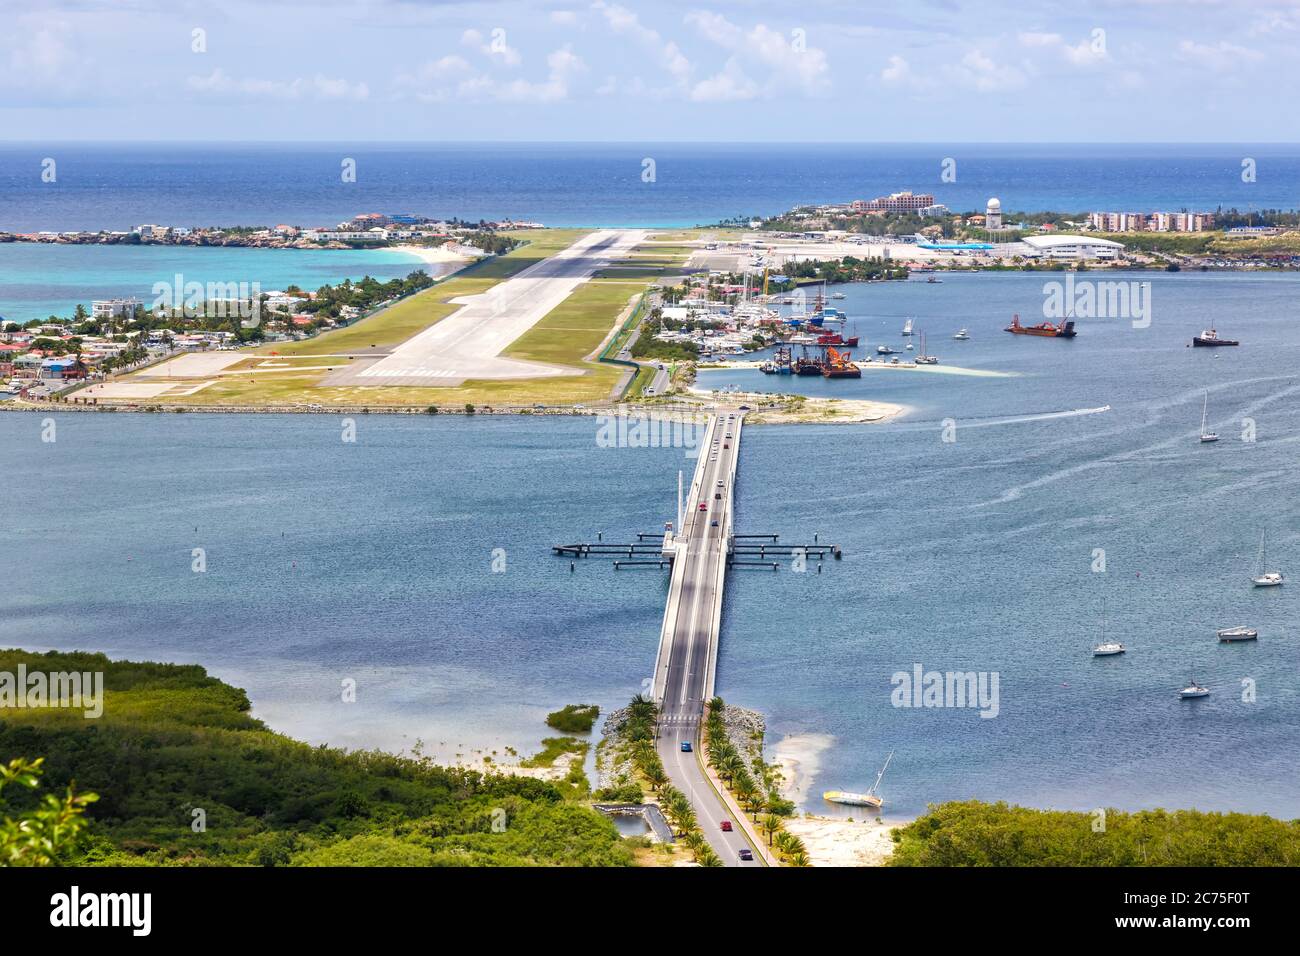 Sint Maarten - 18 septembre 2016 : vue d'ensemble de l'aéroport de Sint Maarten (SXM) dans les Caraïbes. Banque D'Images